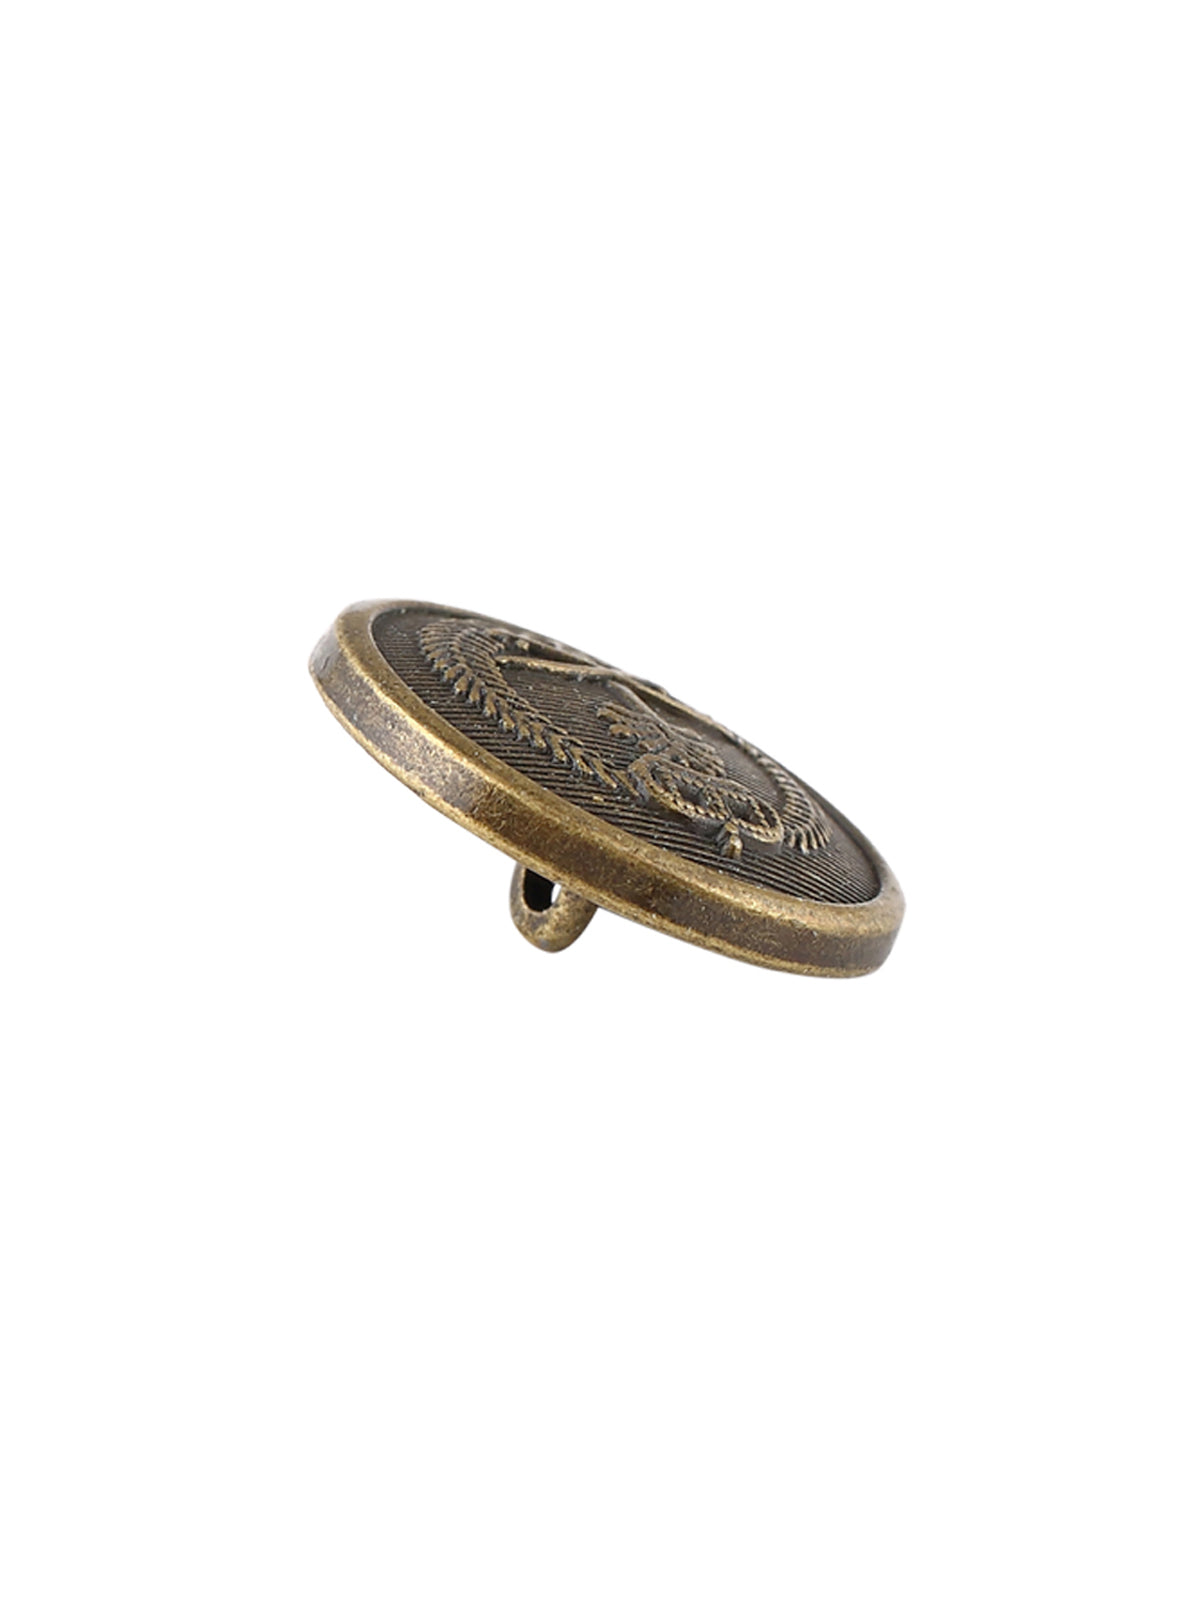 Royal Emblem Design Antique Brass Blazer Button